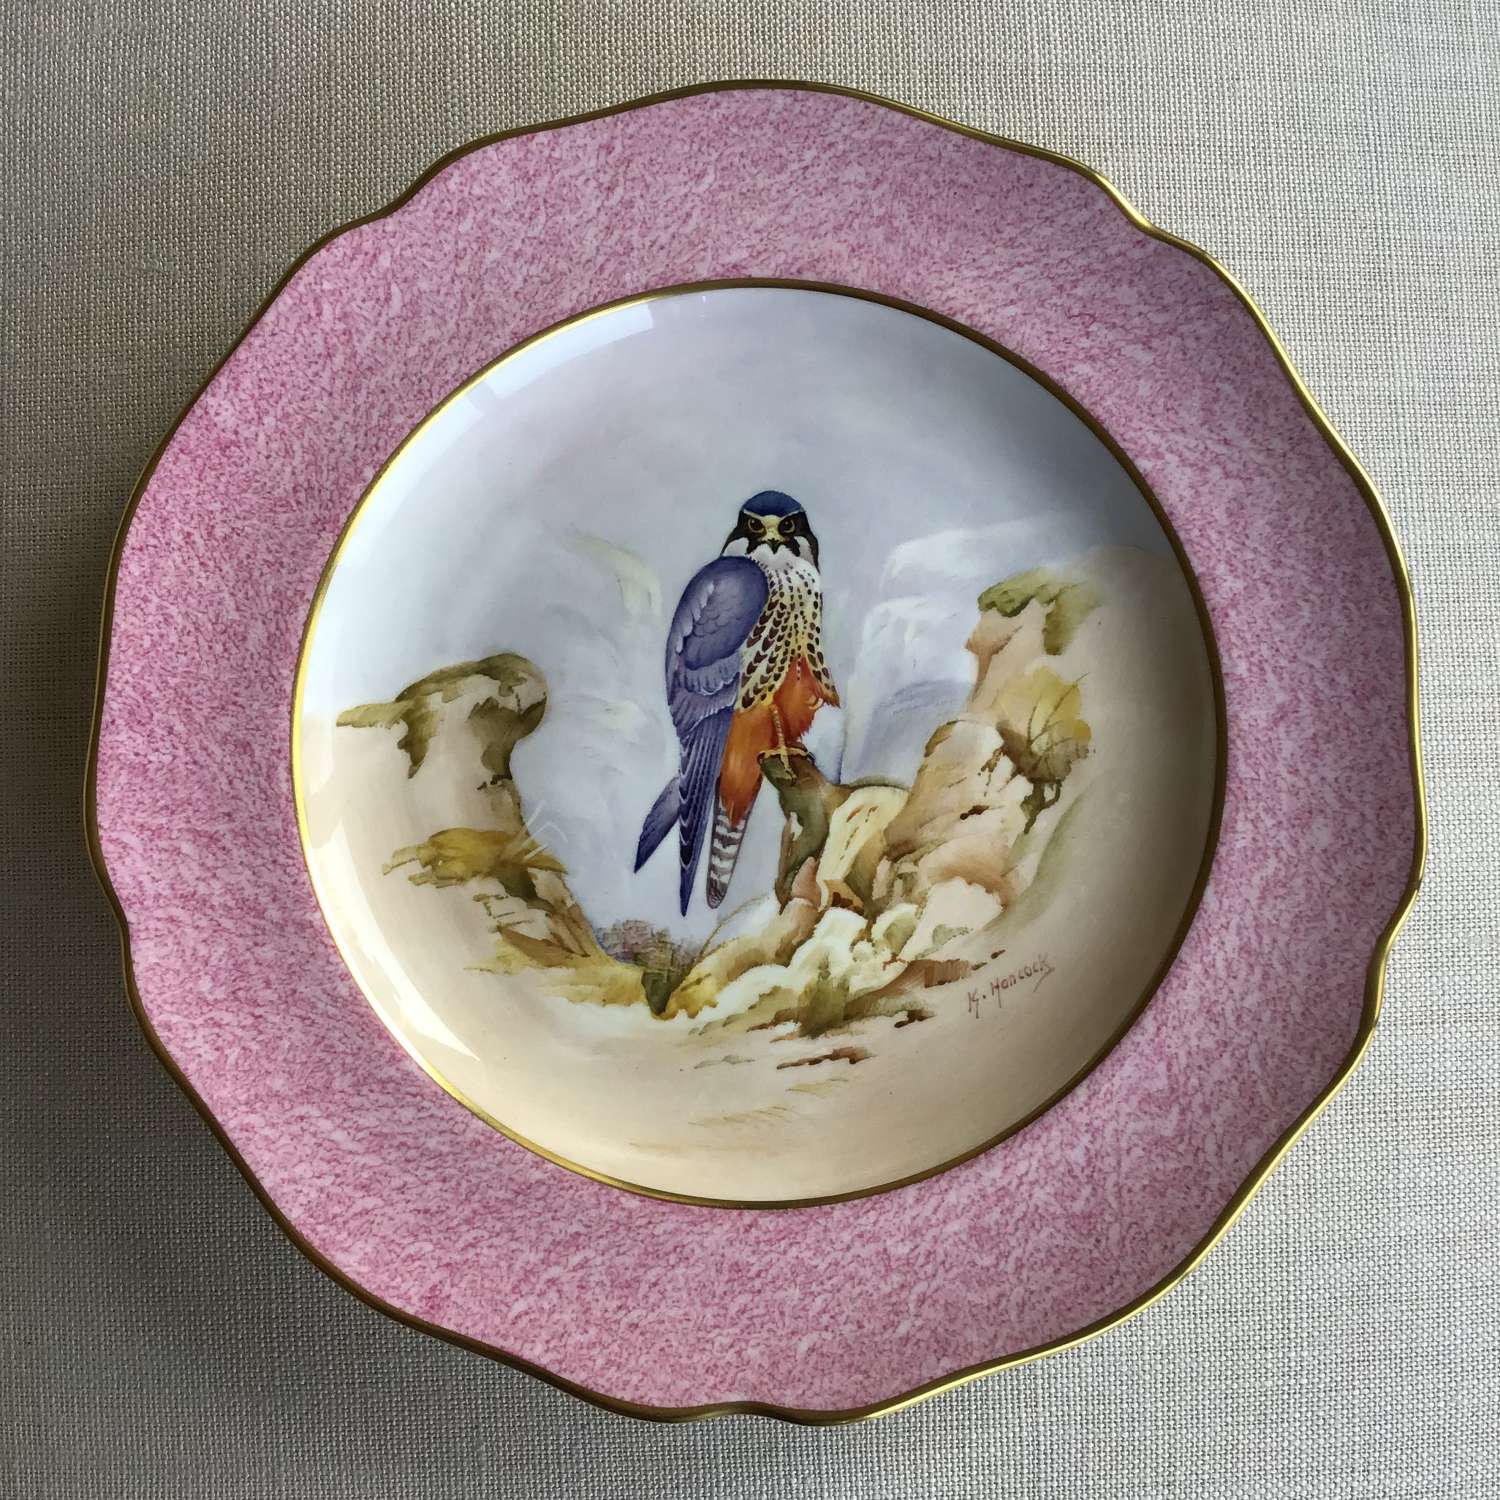 Sutherland bone china decorative plate with peregrine falcon